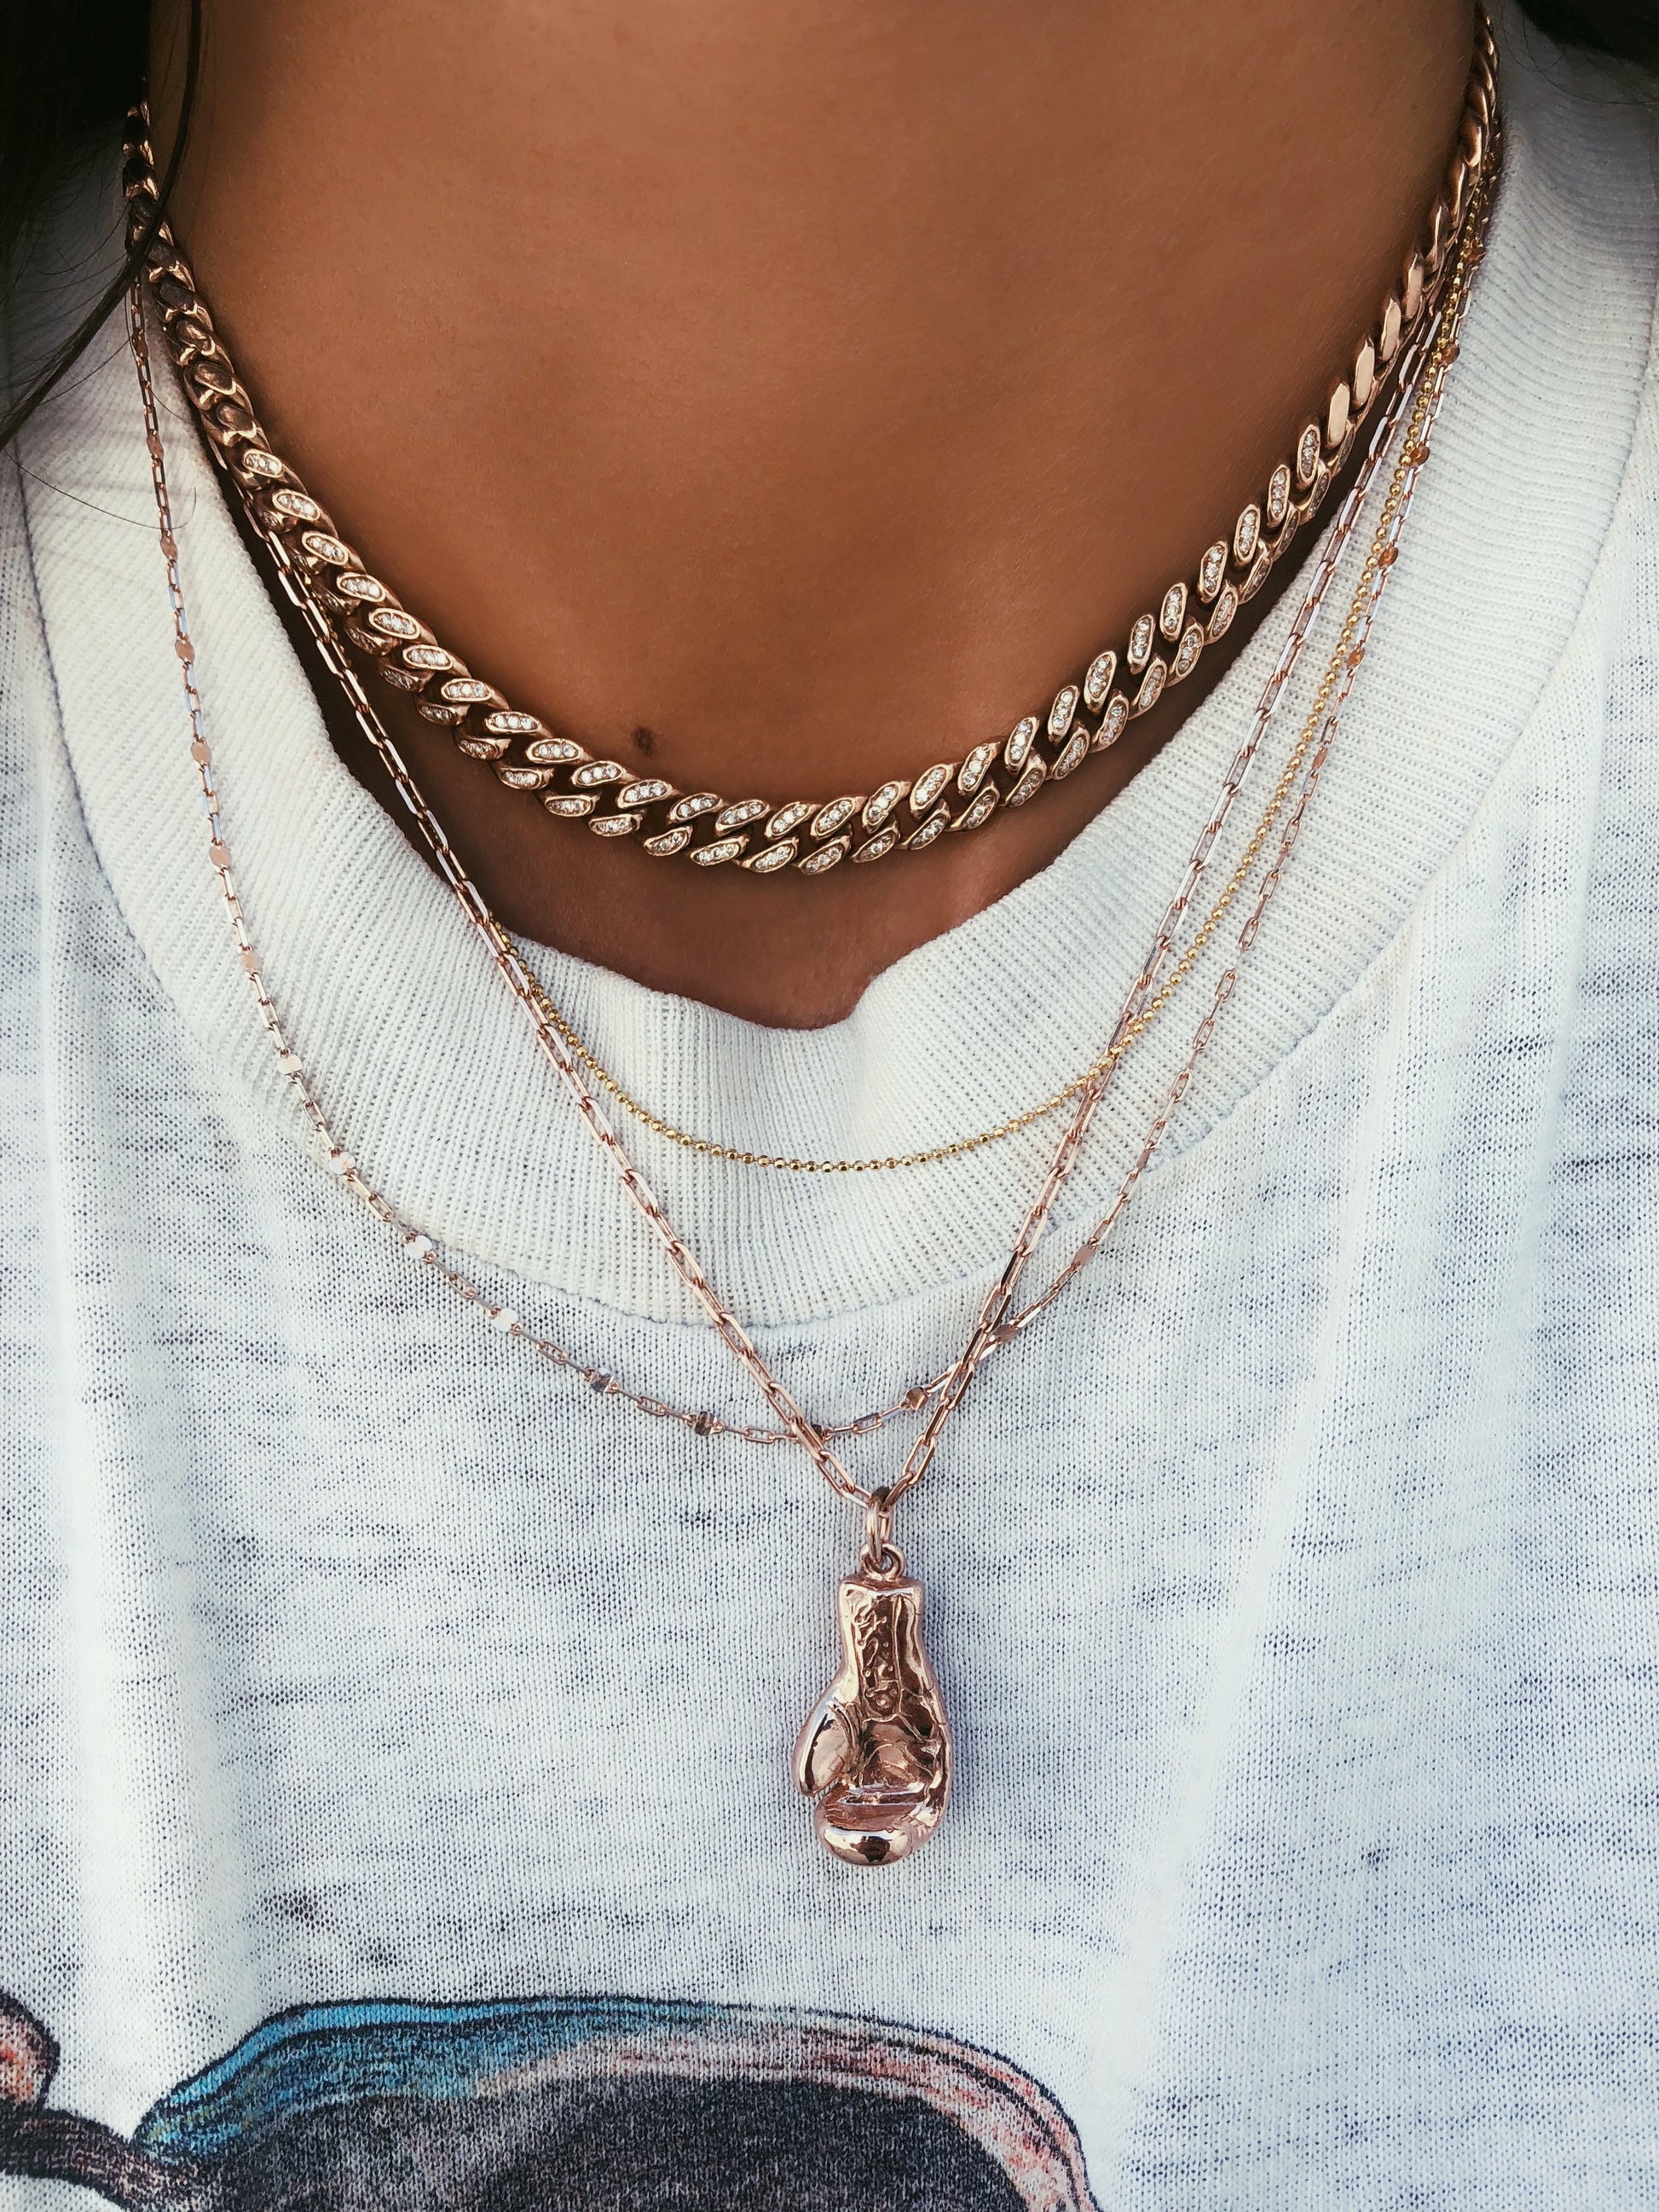 14kt golden glove necklace - Luna Skye